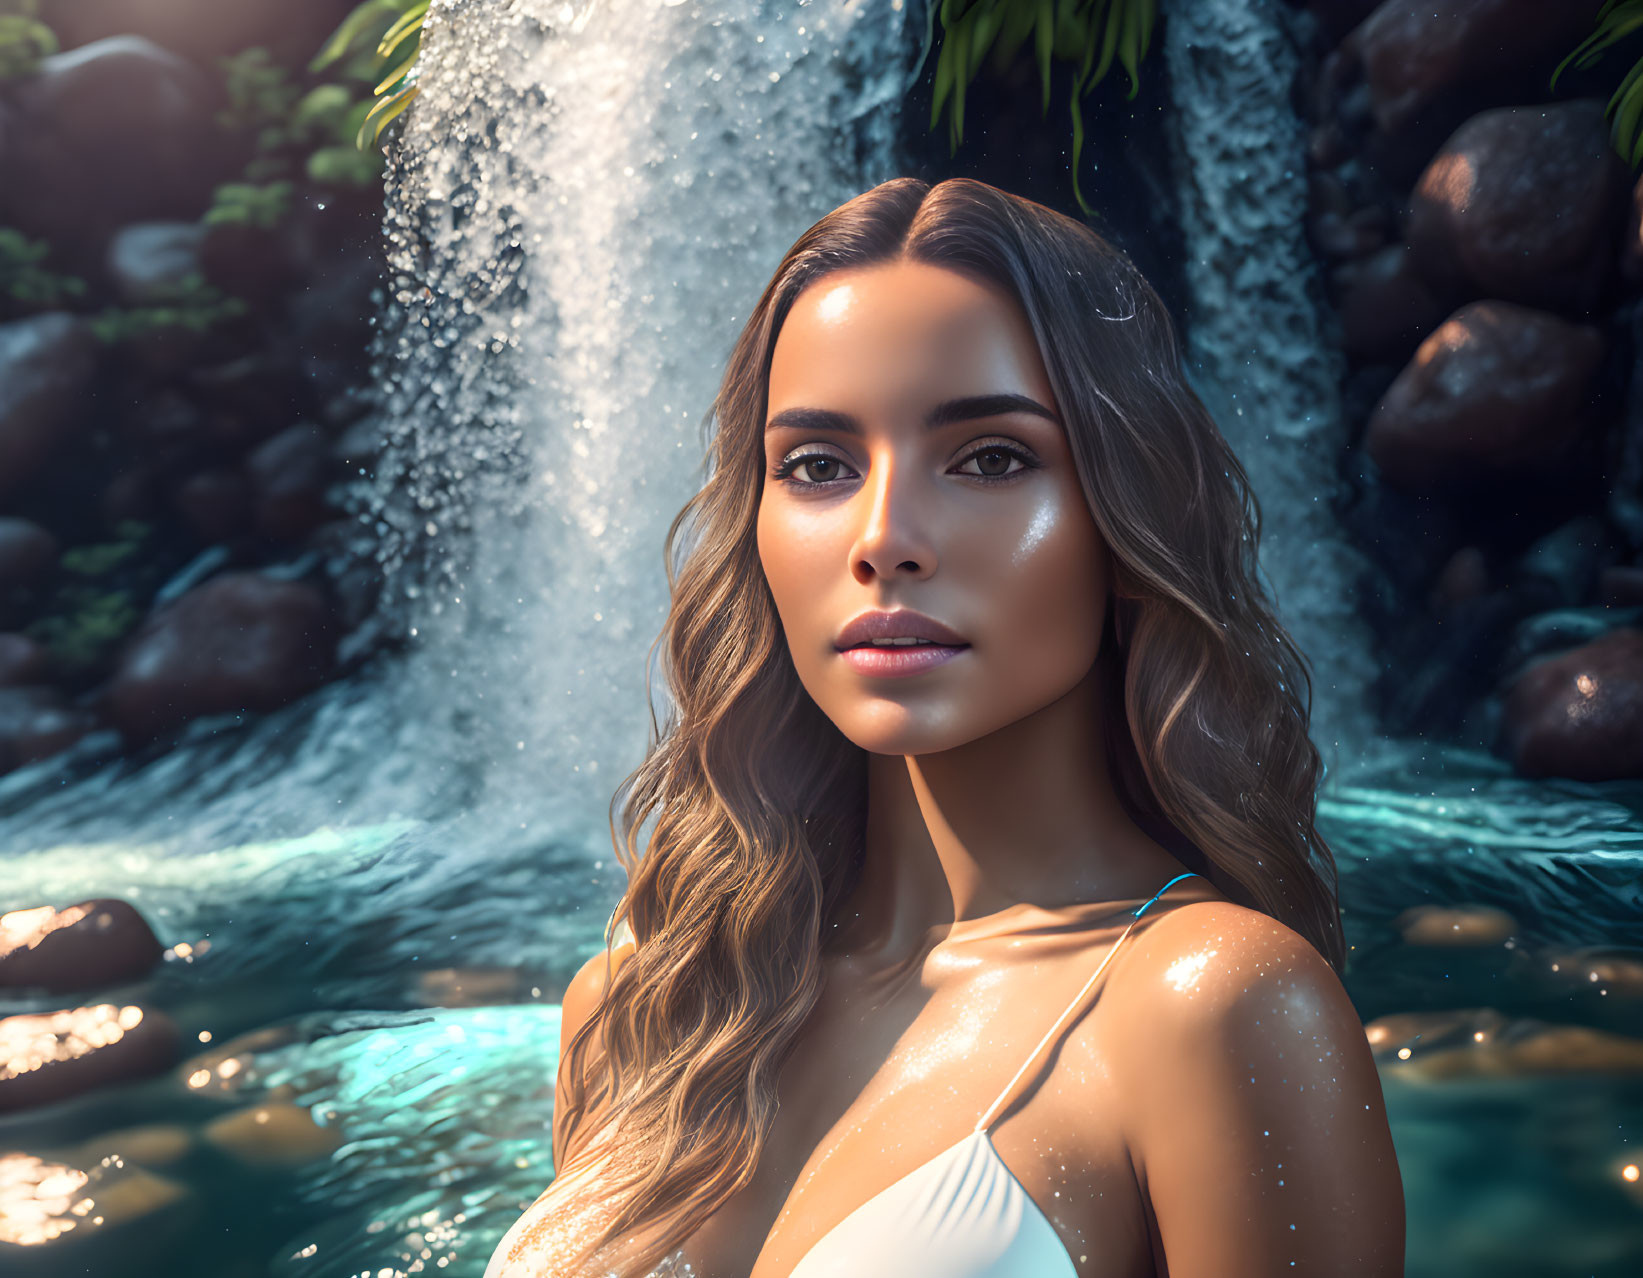 A beautiful girl at the waterfall